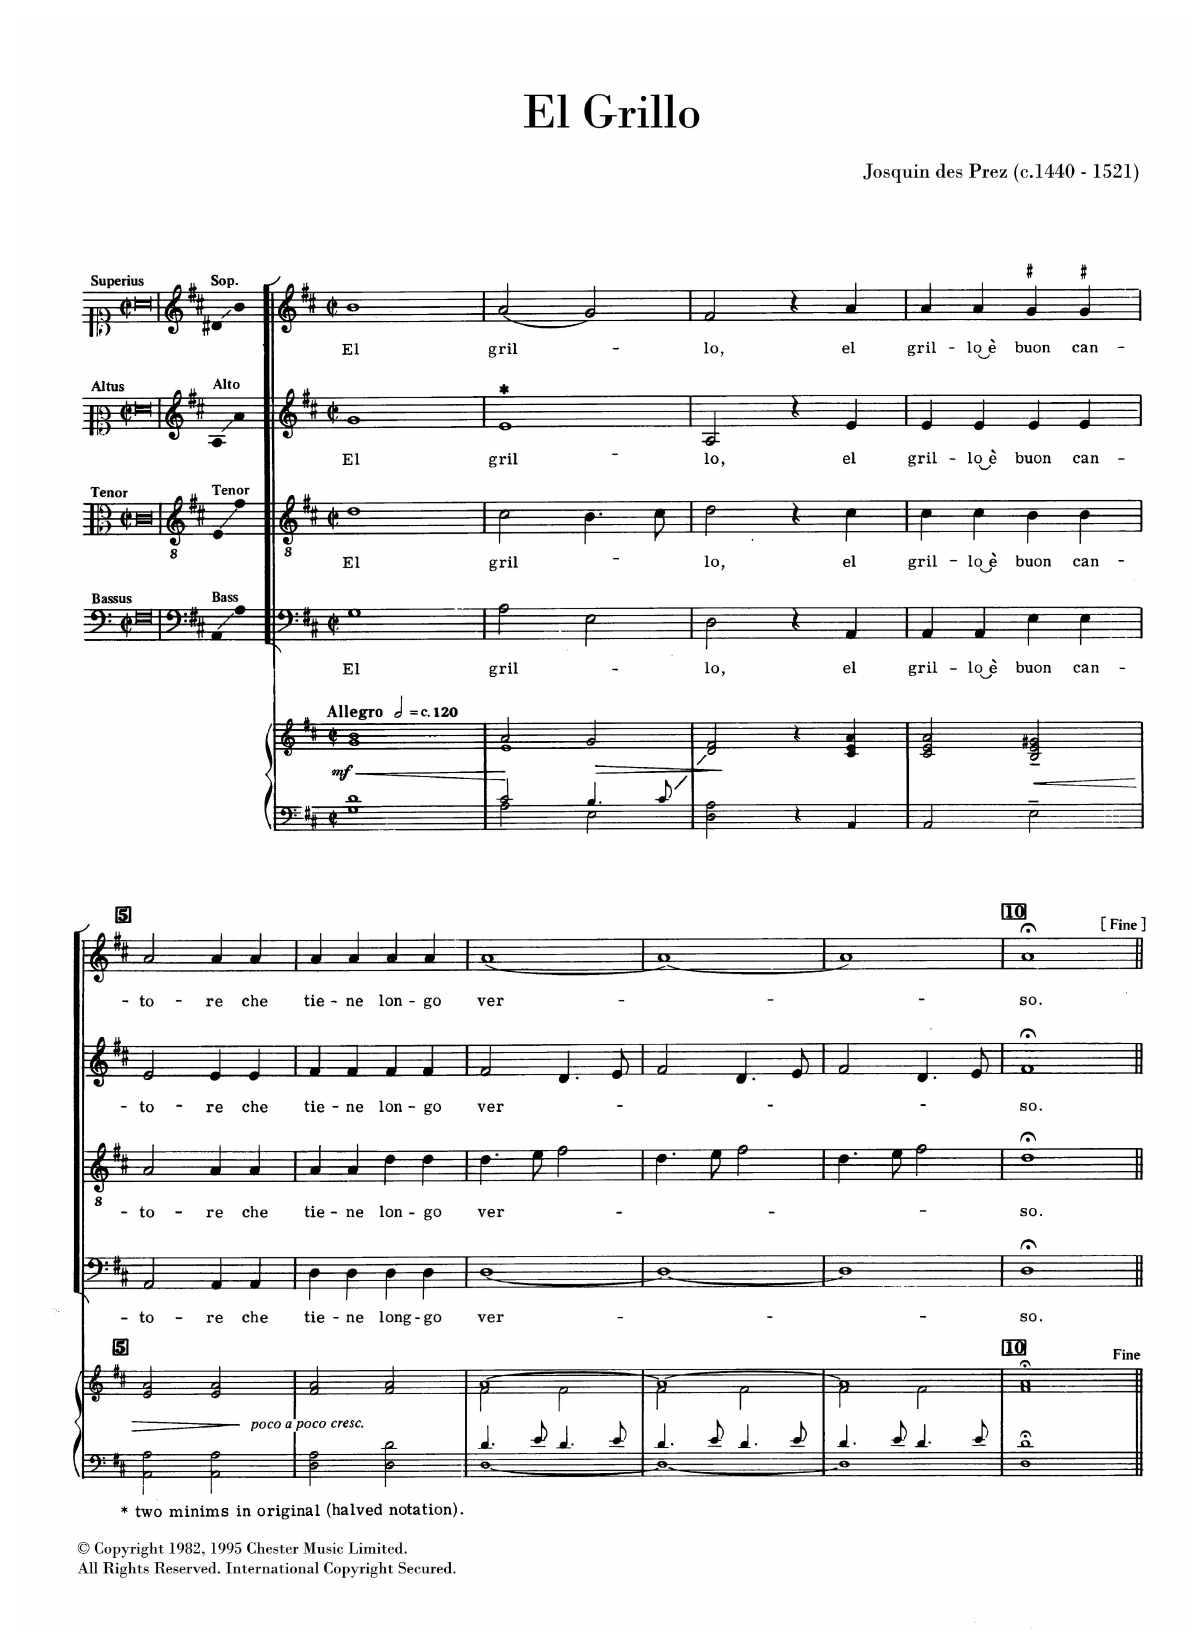 Josquin des Prez El Grillo Sheet Music Notes & Chords for SATB Choir - Download or Print PDF